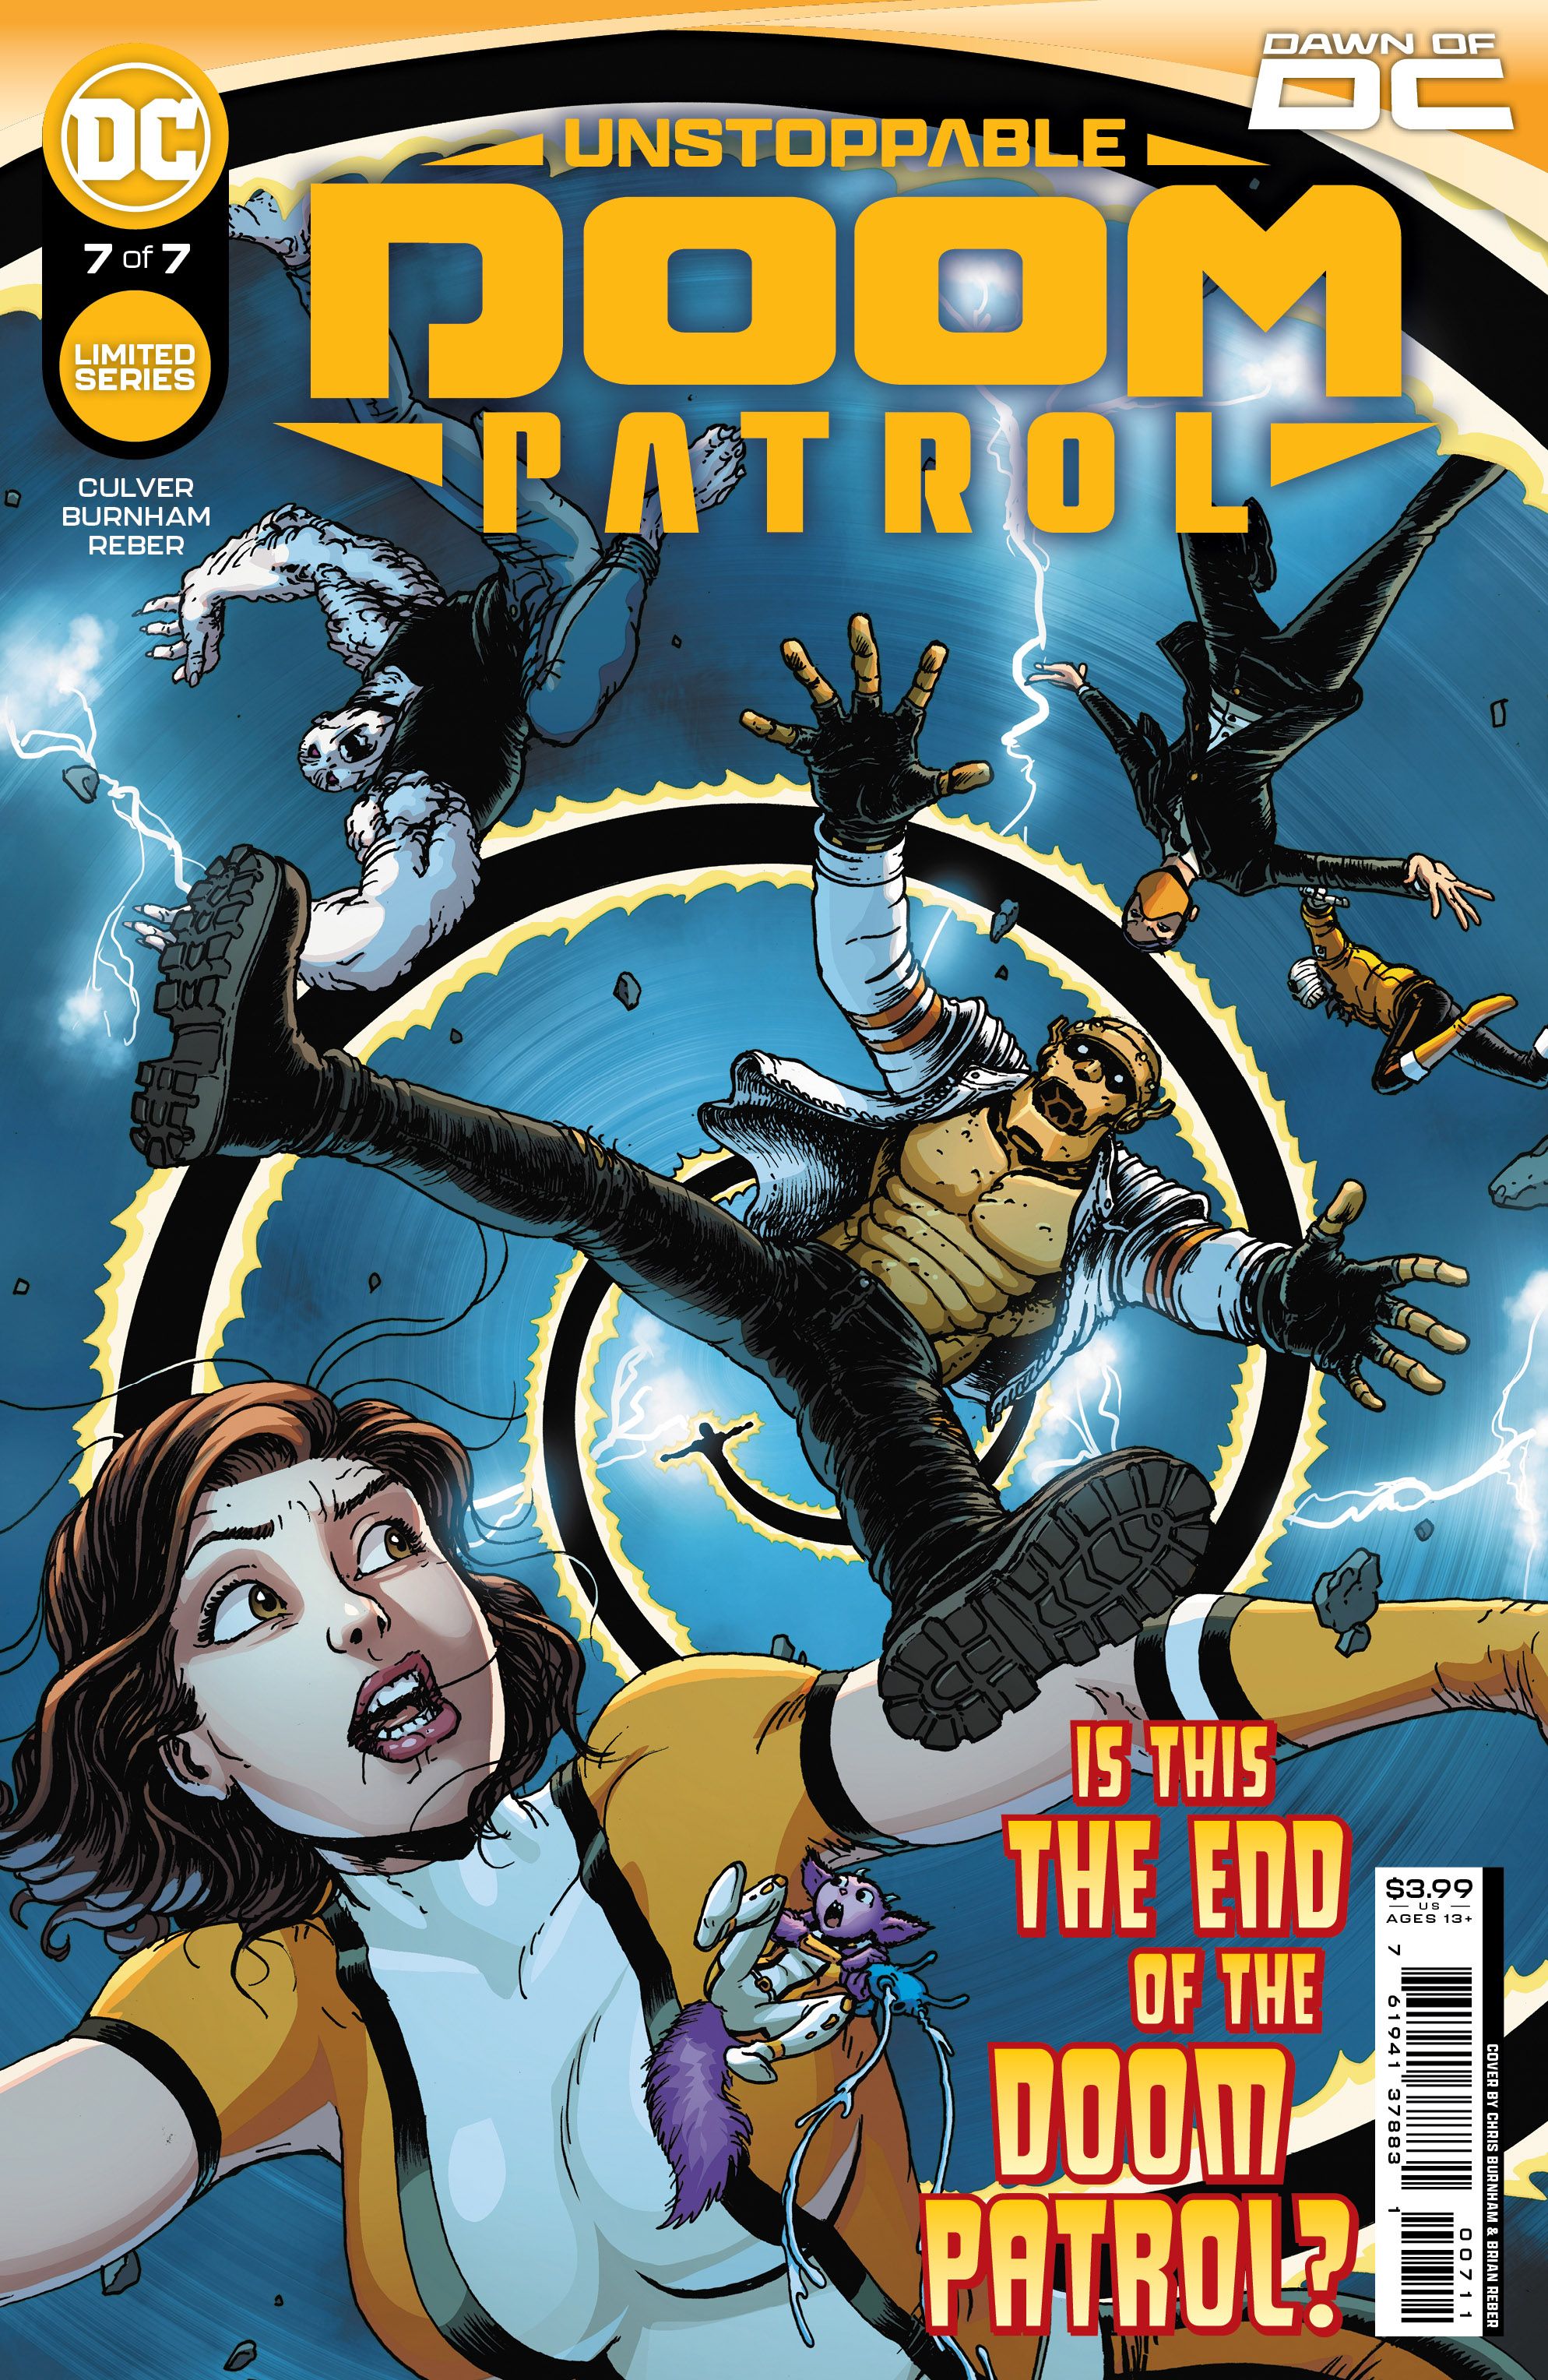 Unstoppable Doom Patrol #7 Comic